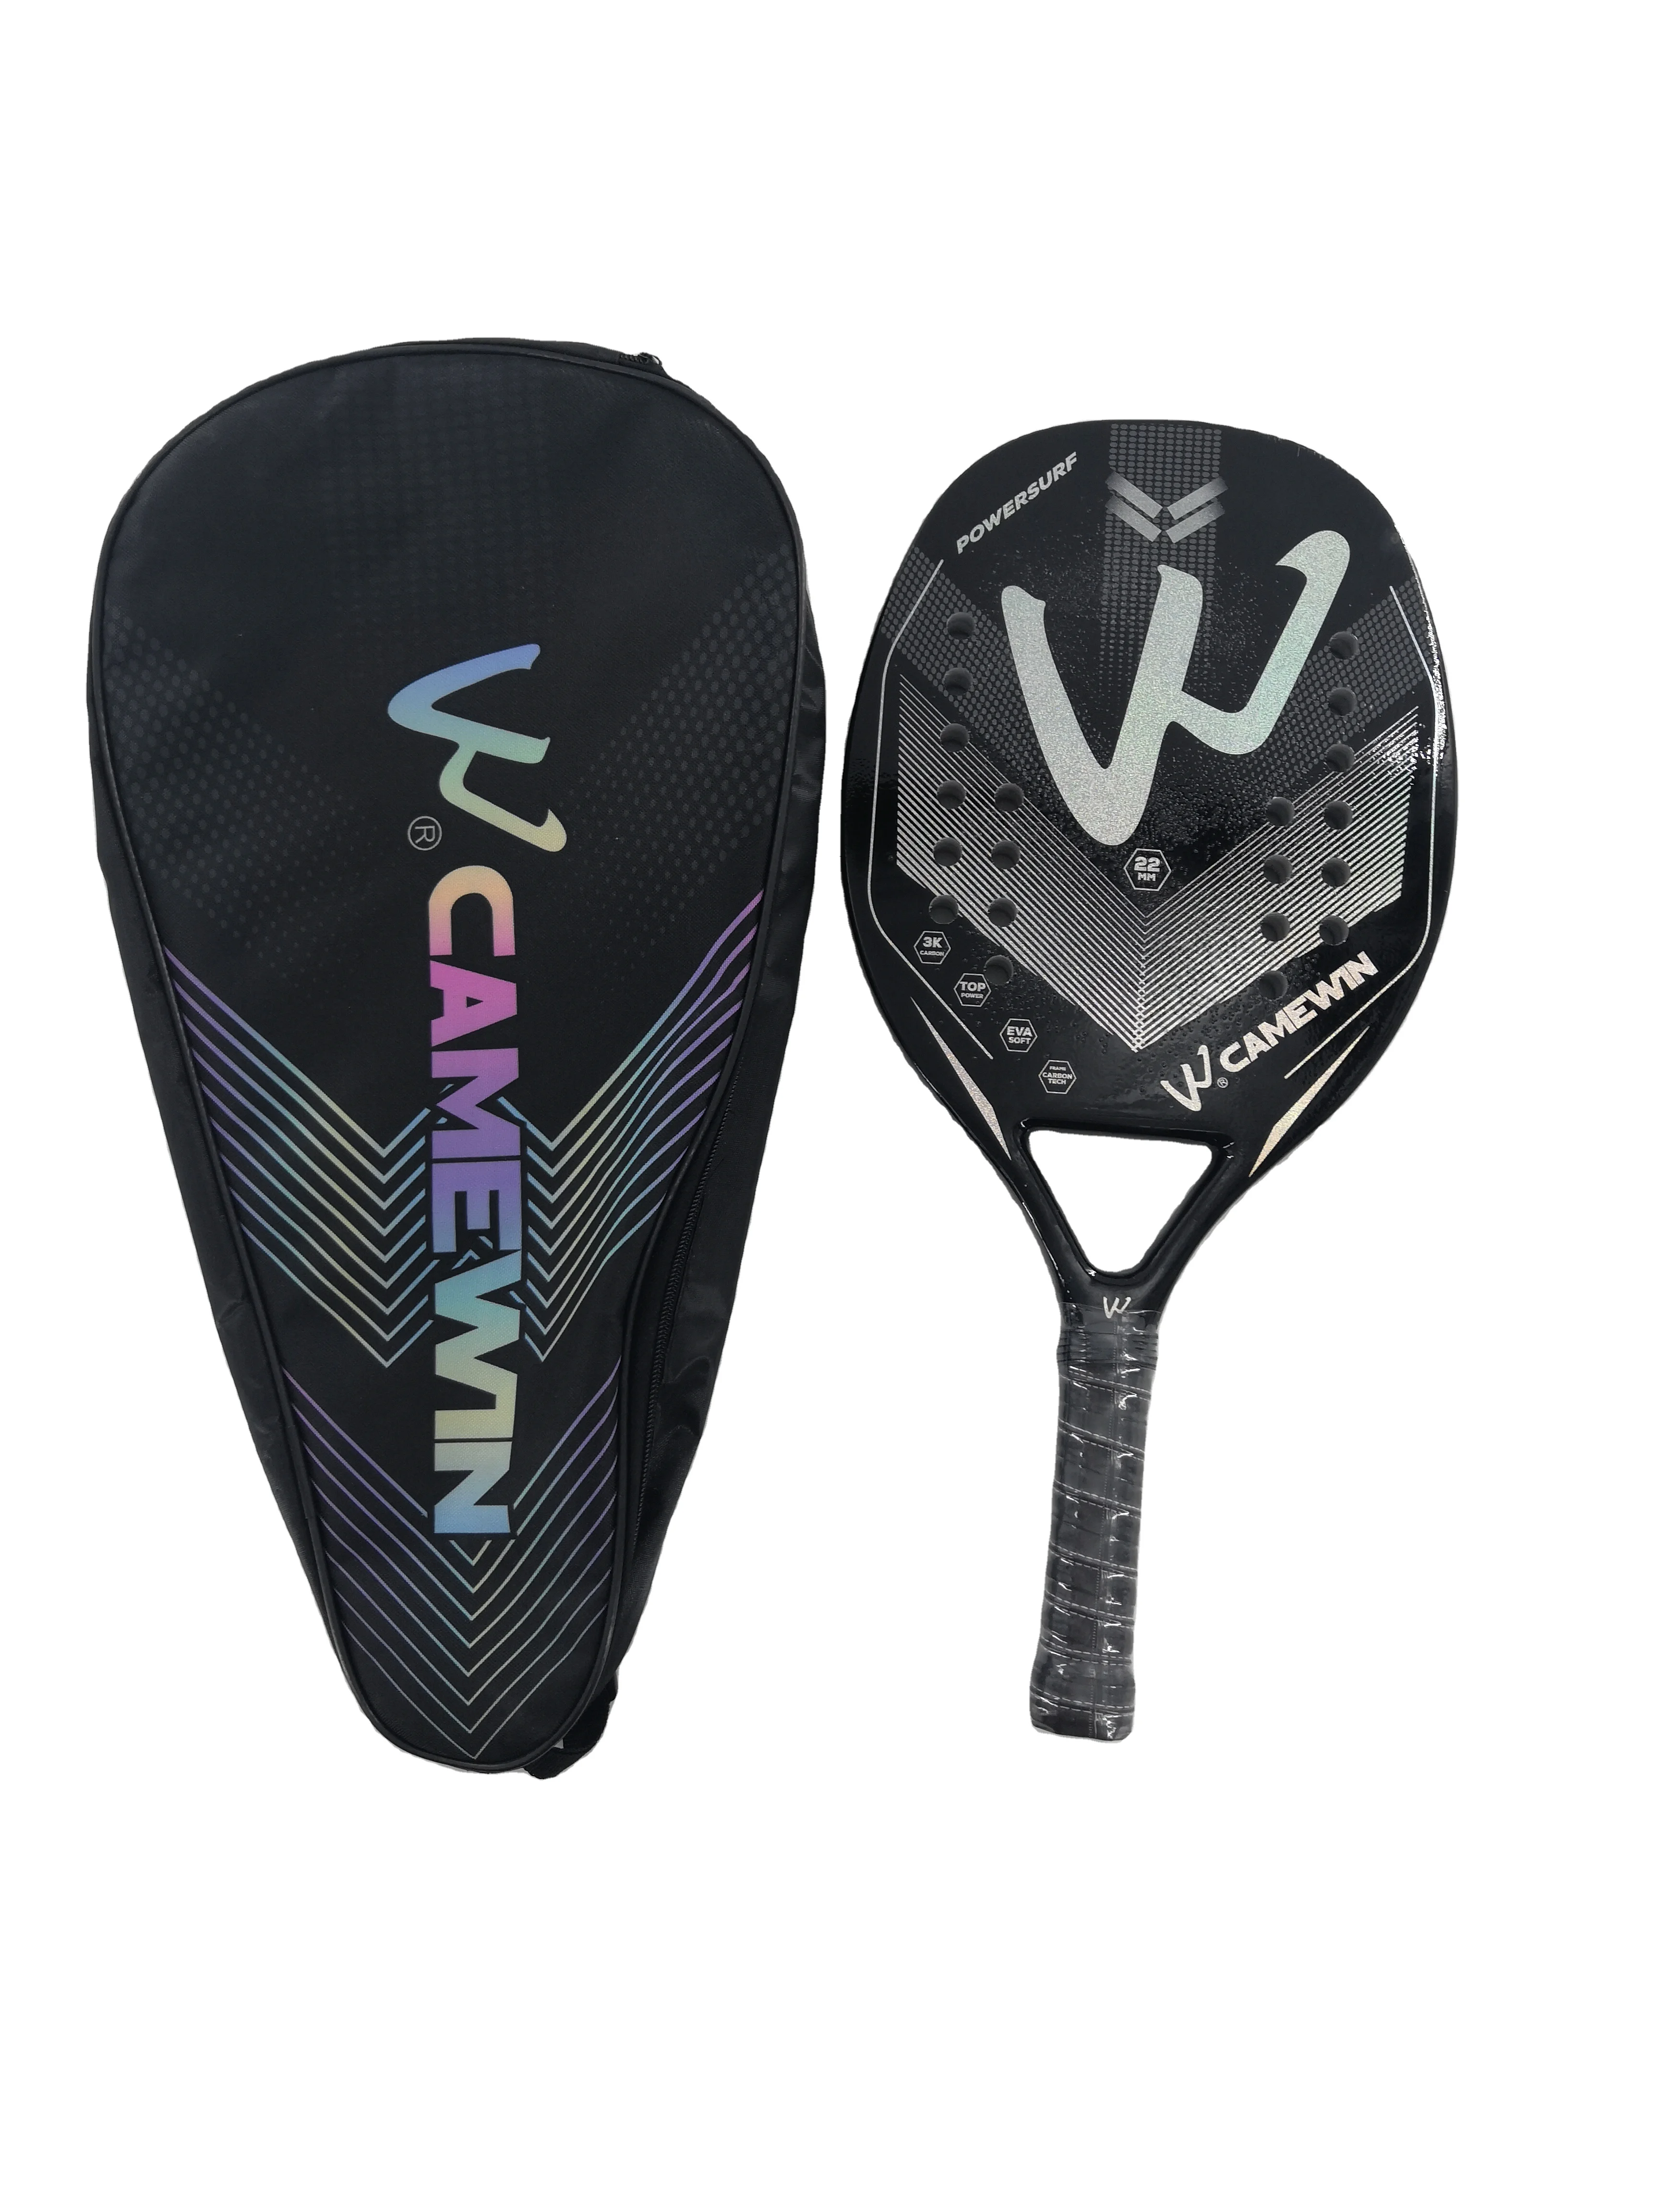 Camewin 3K Full Carbon Fiber Padel Tennis Racket PROFESSIONAL